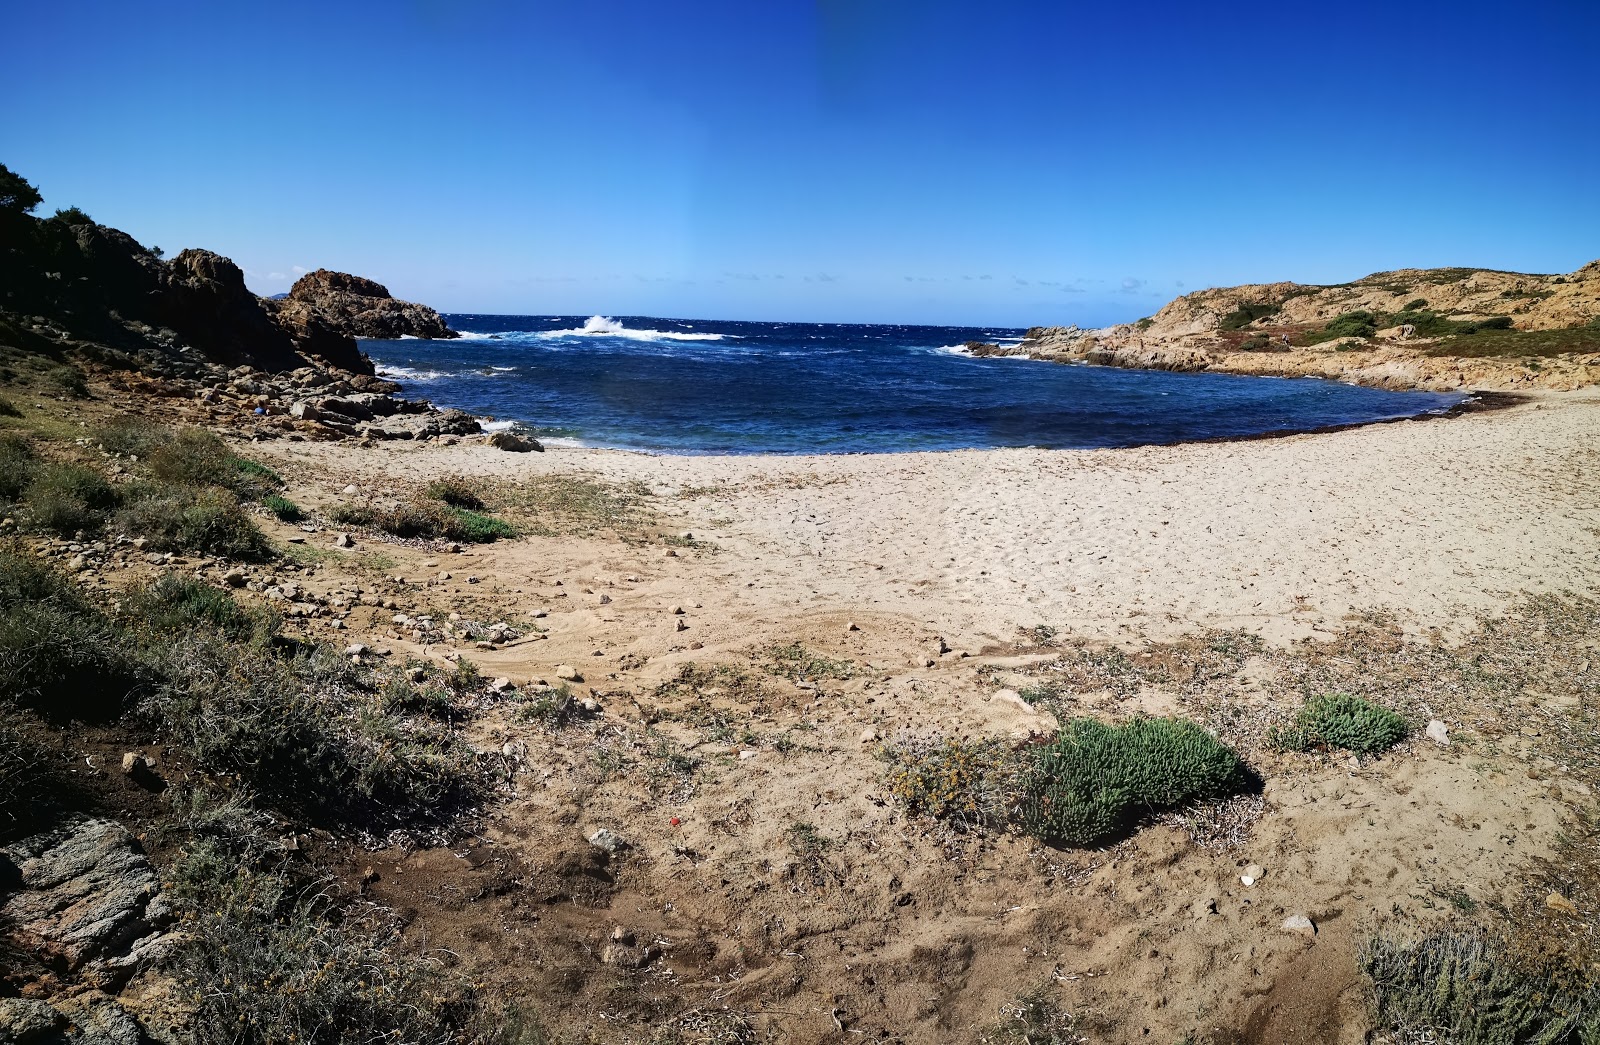 Foto de Vana beach con guijarro fino claro superficie